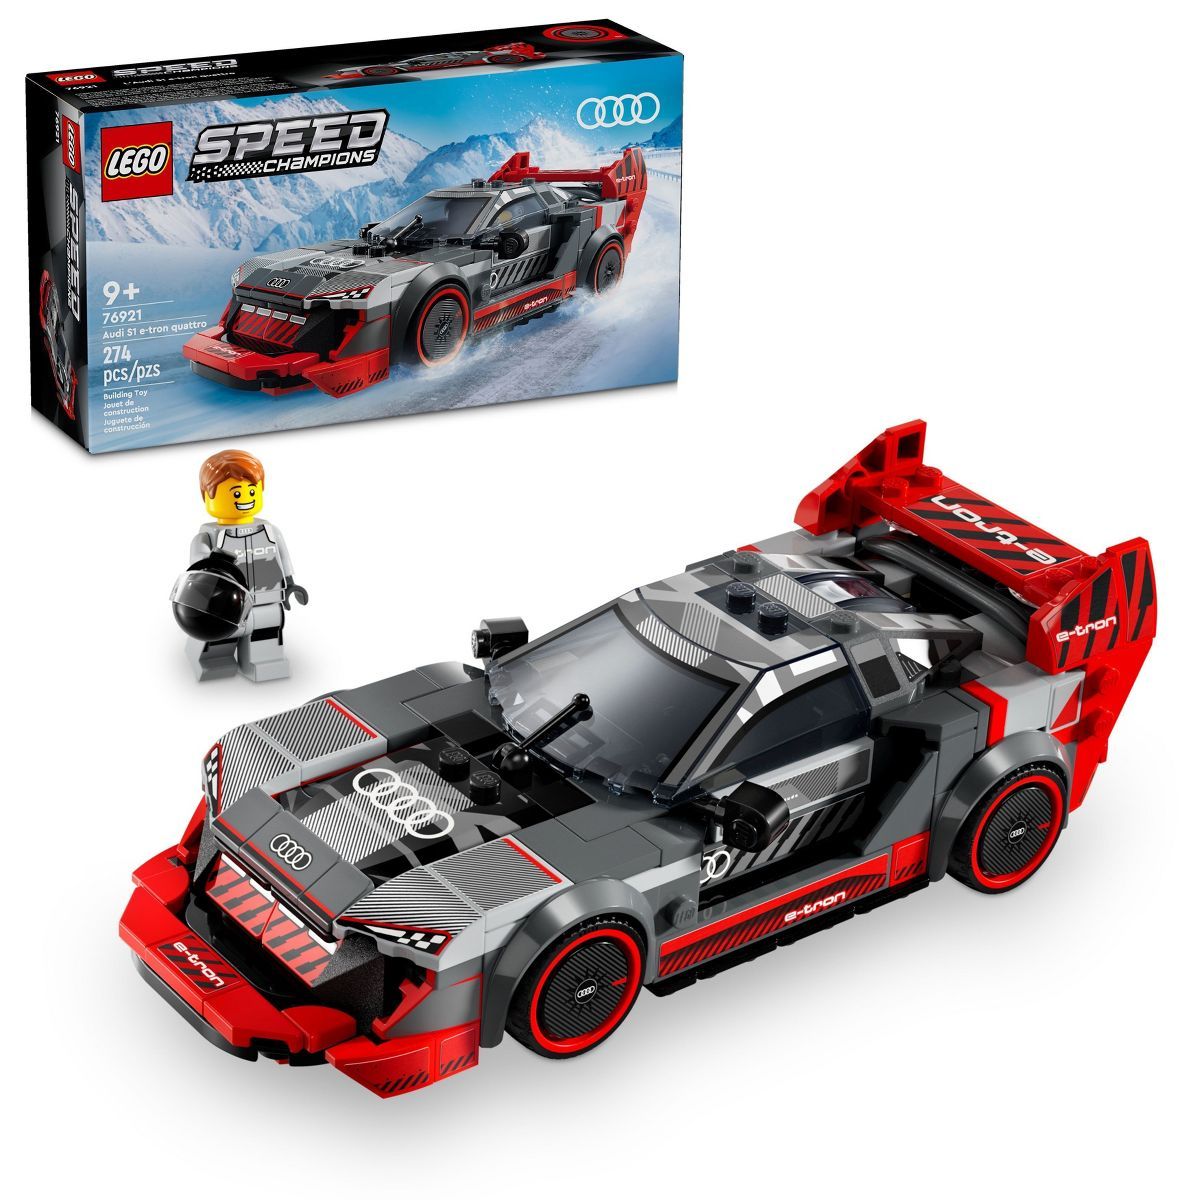 LEGO Speed Champions Audi S1 e-tron quattro Race Car Toy 76921 | Target